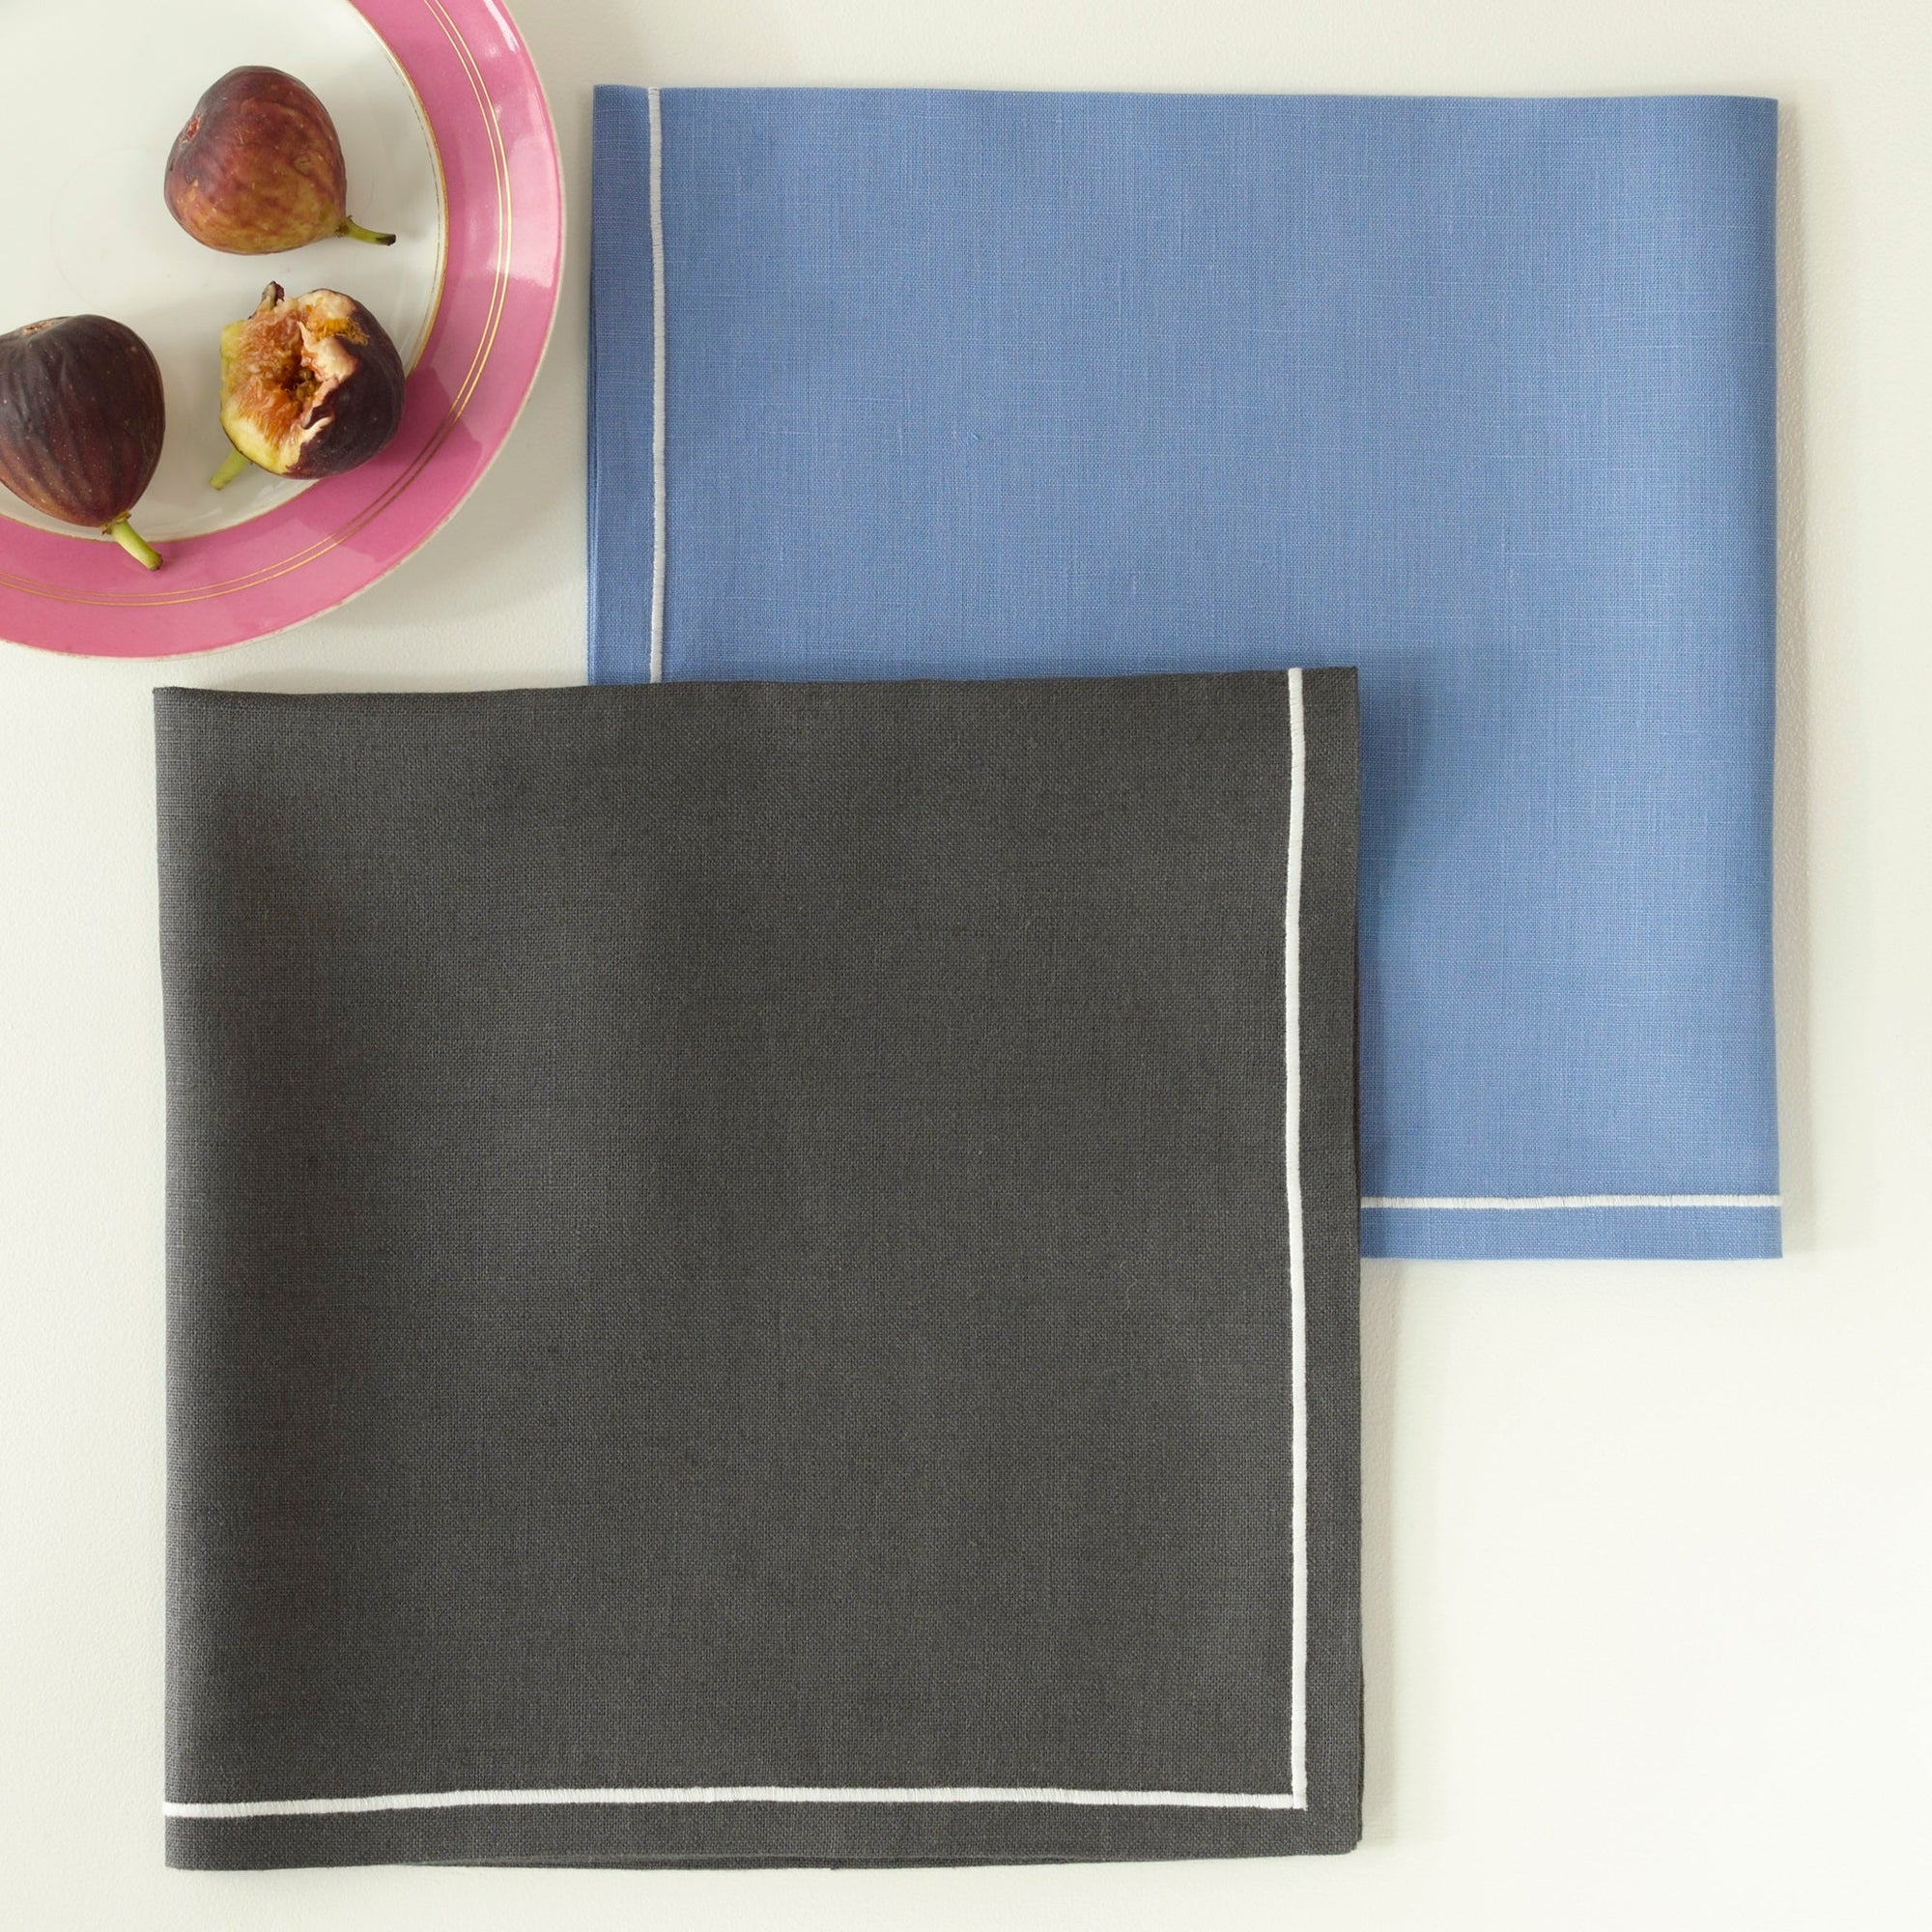 Folded Matouk Satin Stitch Napkins in Color Smoke Grey and Sky Blue